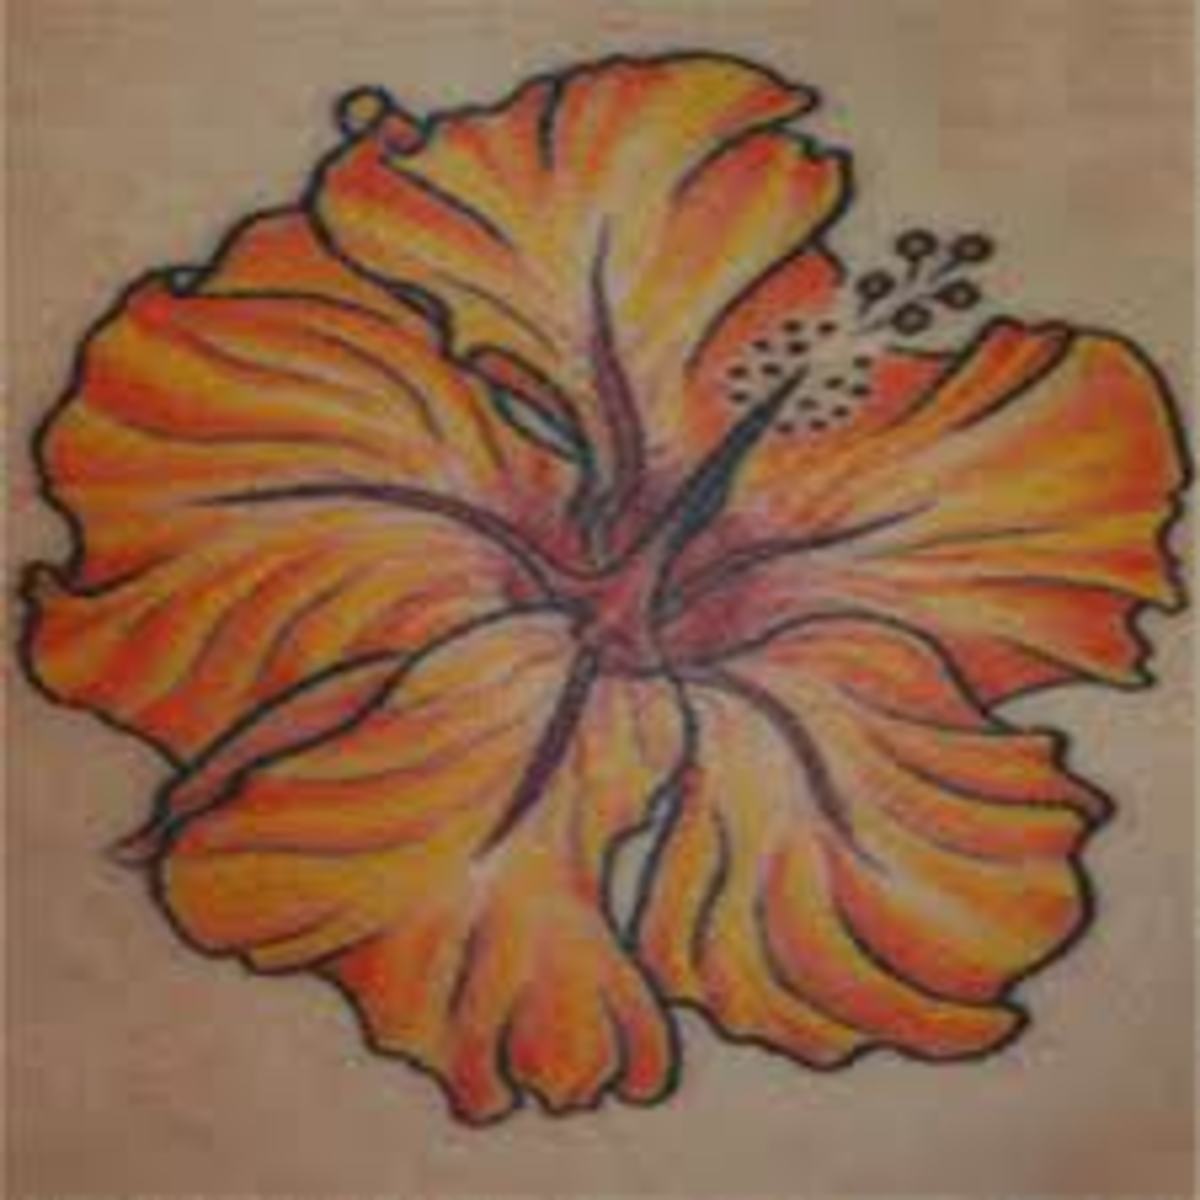 Black and gray Peony, Hawaiian/island flower, and other flower tattoo  inspiration | Tattoos, Half sleeve tattoo, Body art tattoos